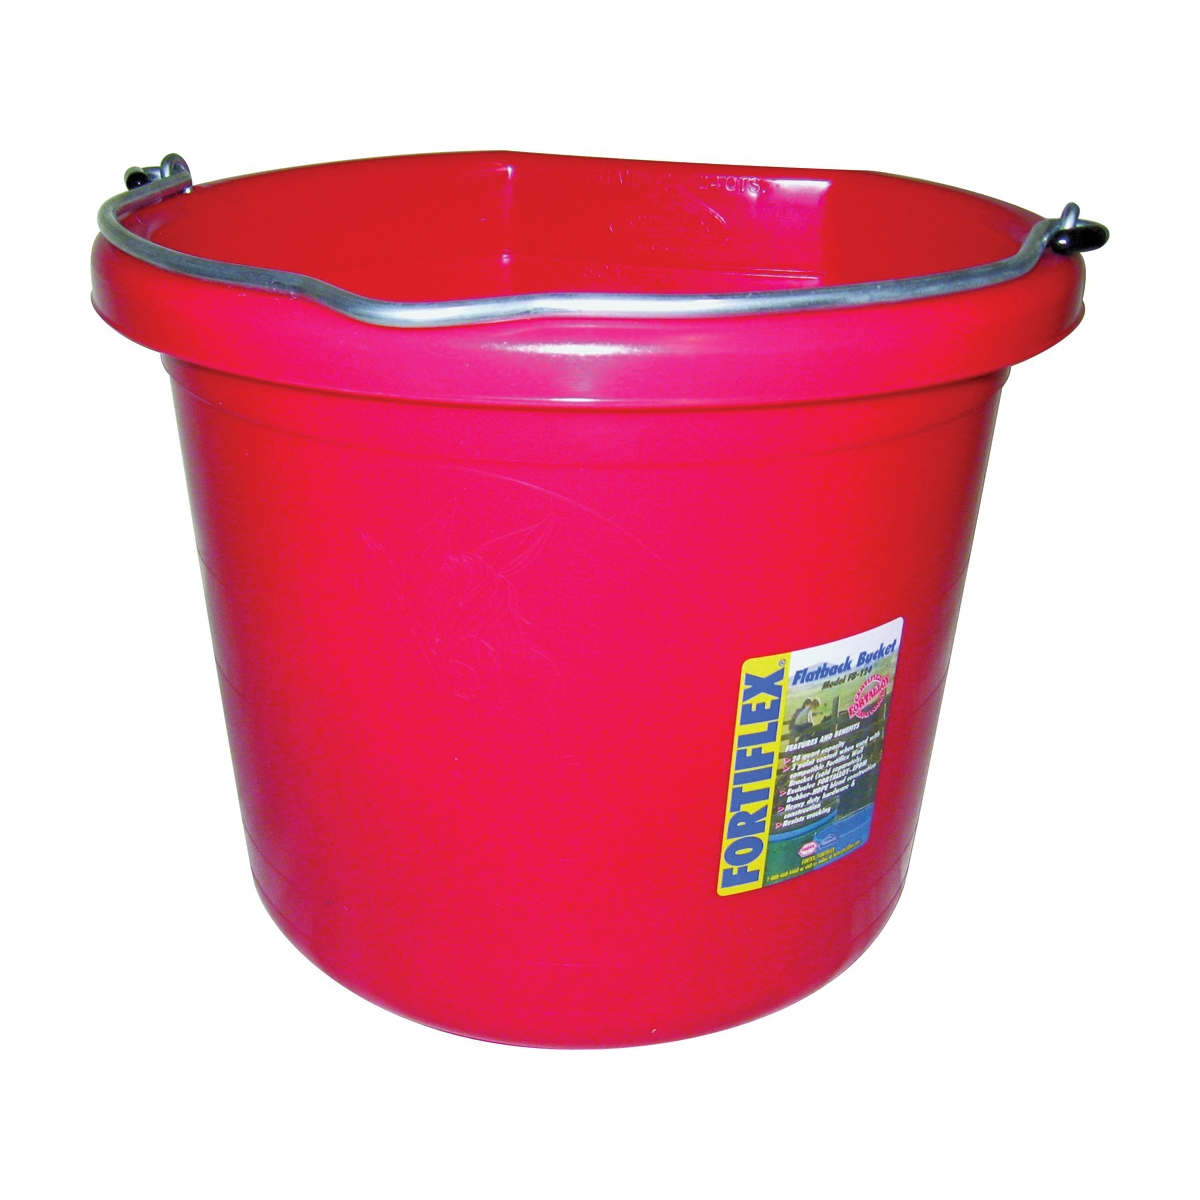 FB-124 Series FB-124 R Bucket, 24 qt Volume, Rubber/Polyethylene, Red